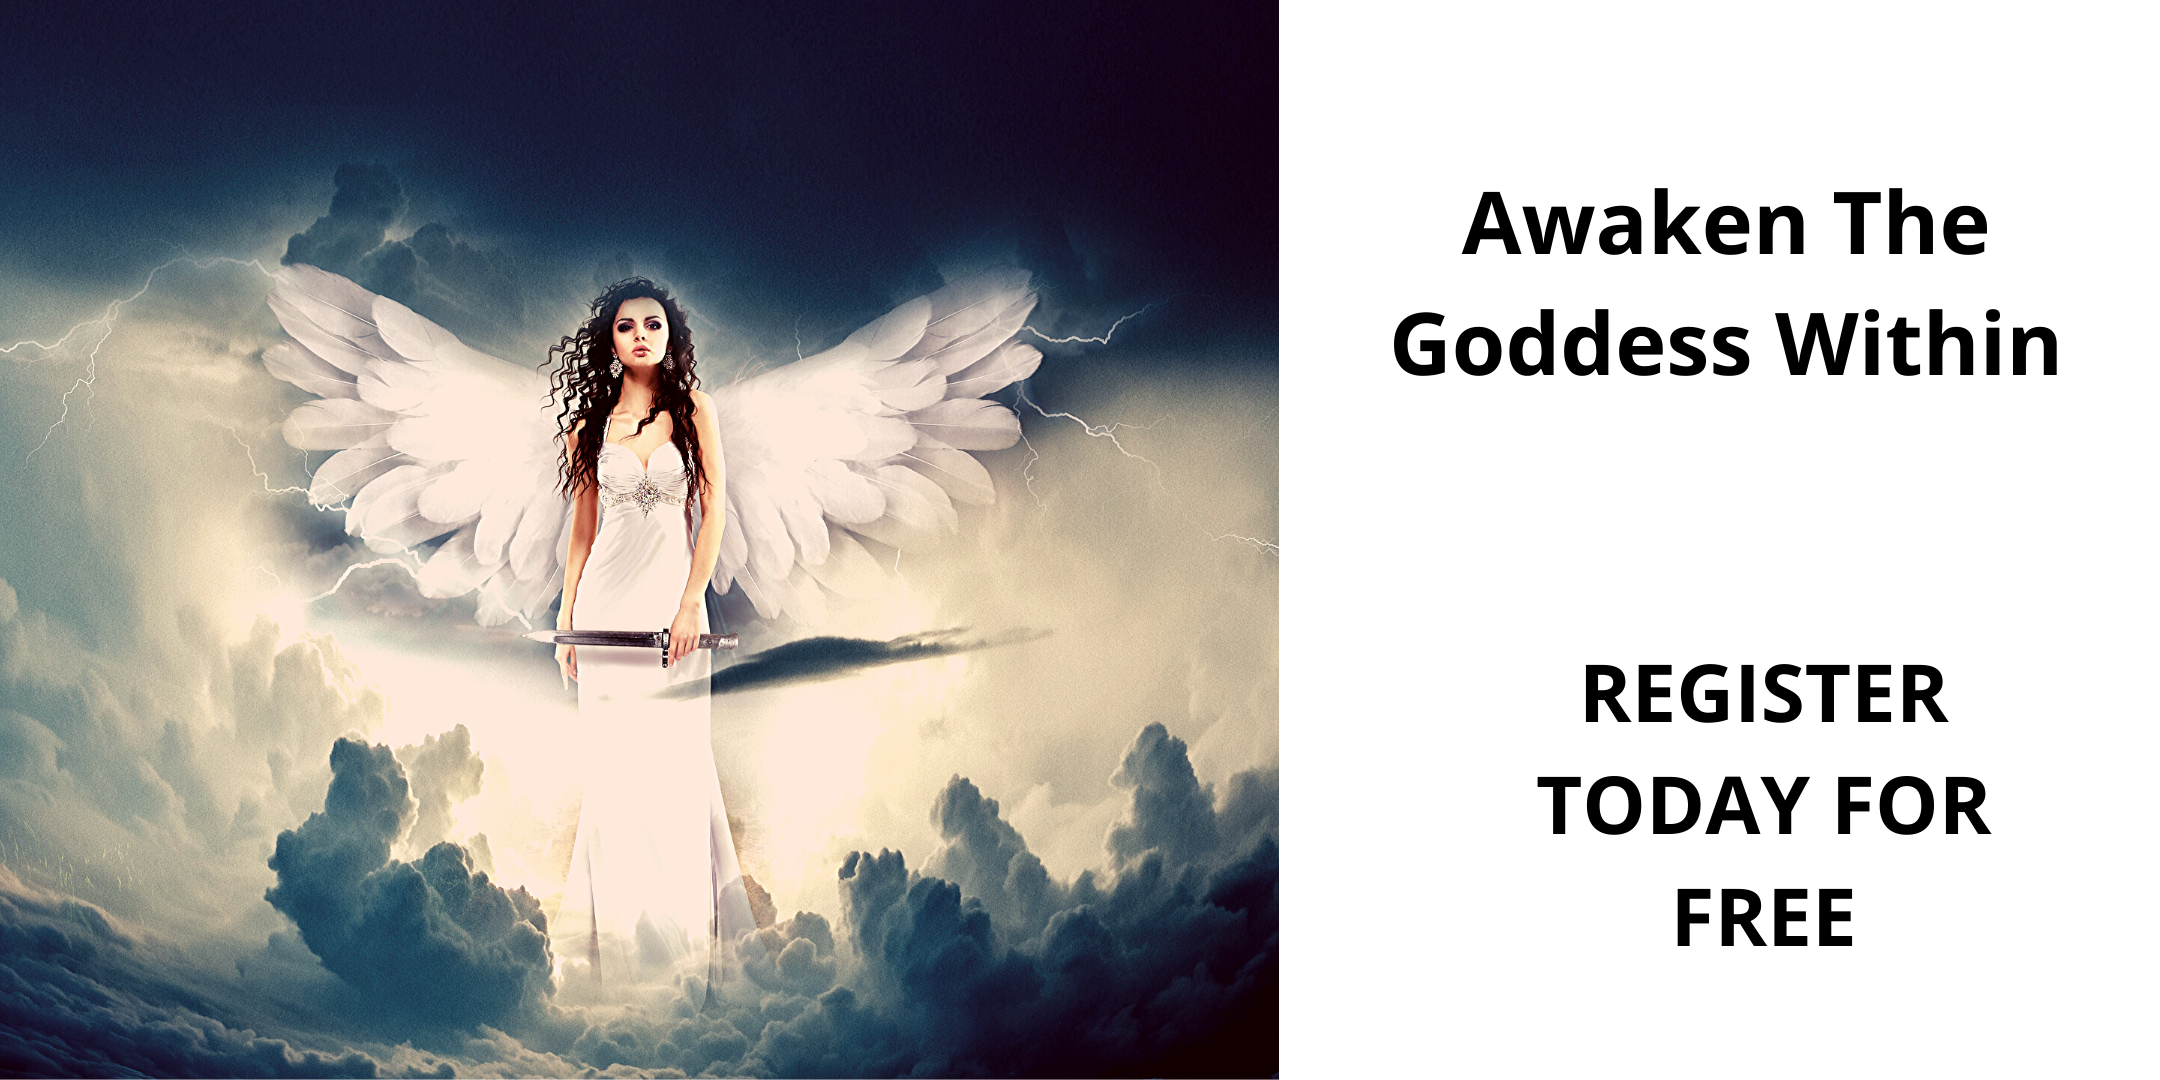 Card Reading To Awaken The Goddess Within - For The Rising Spiritual Goddess